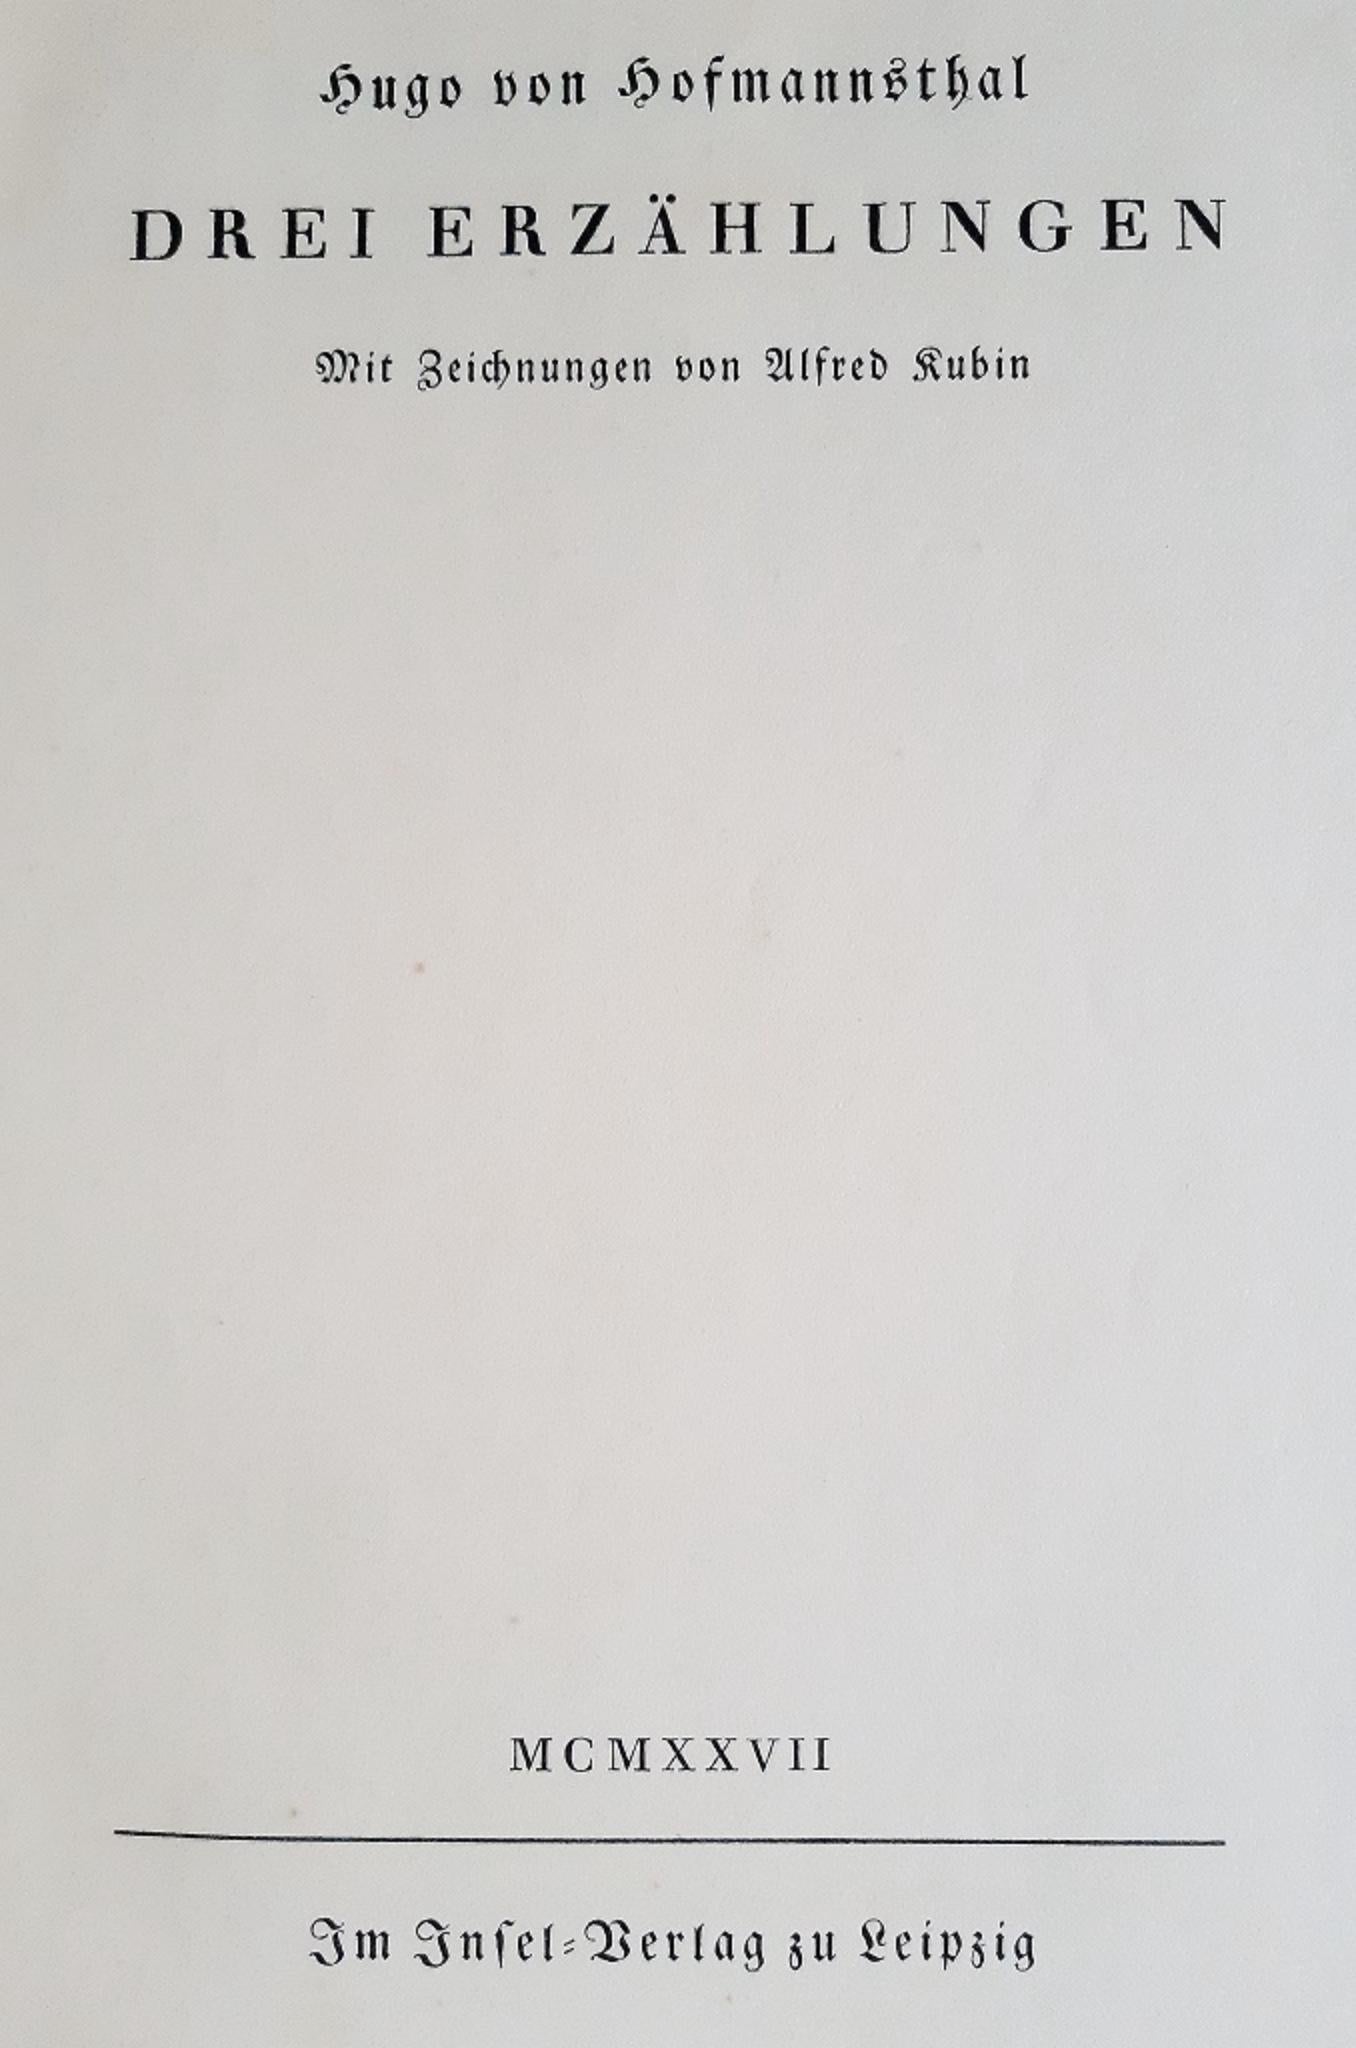 Drei Erzalhungen - Rare Book Illustrated by Alfred Kubin - 1927 2